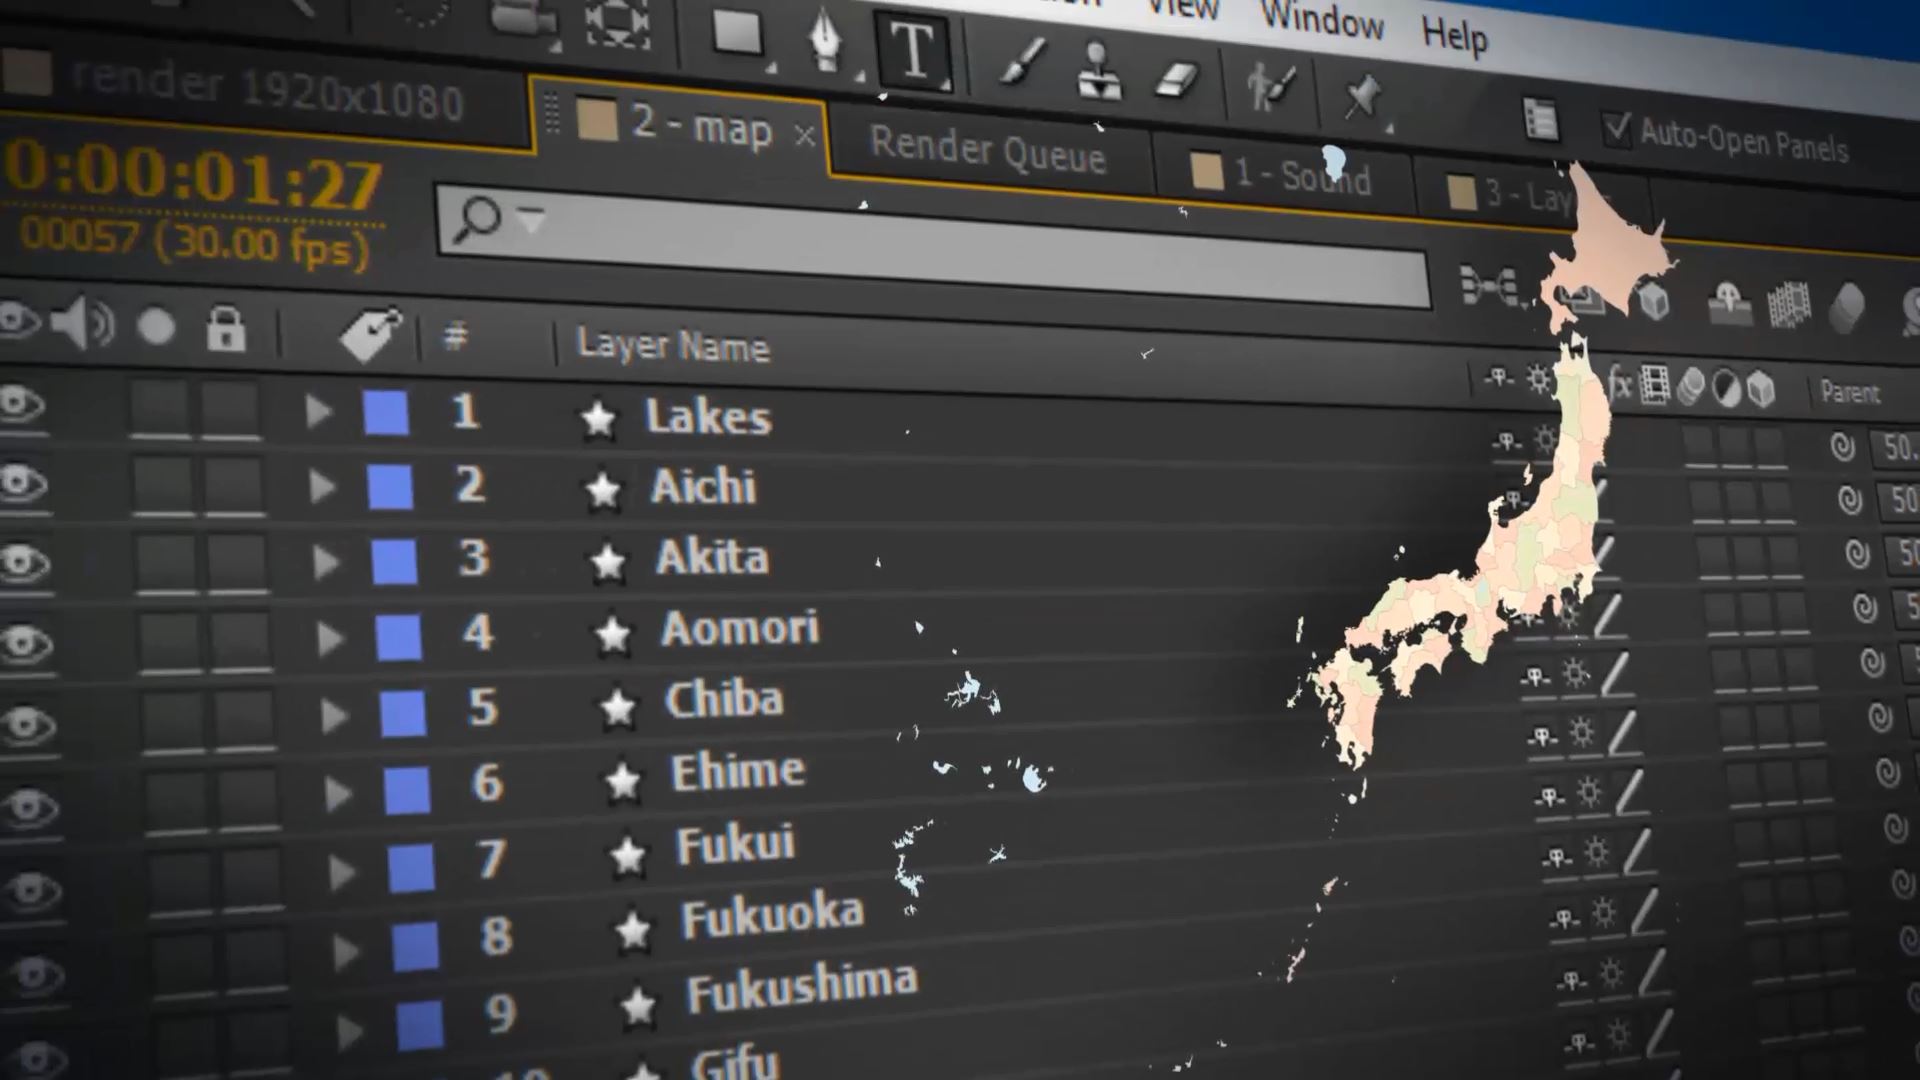  Japan Map Animation - Japanese Map Kit 